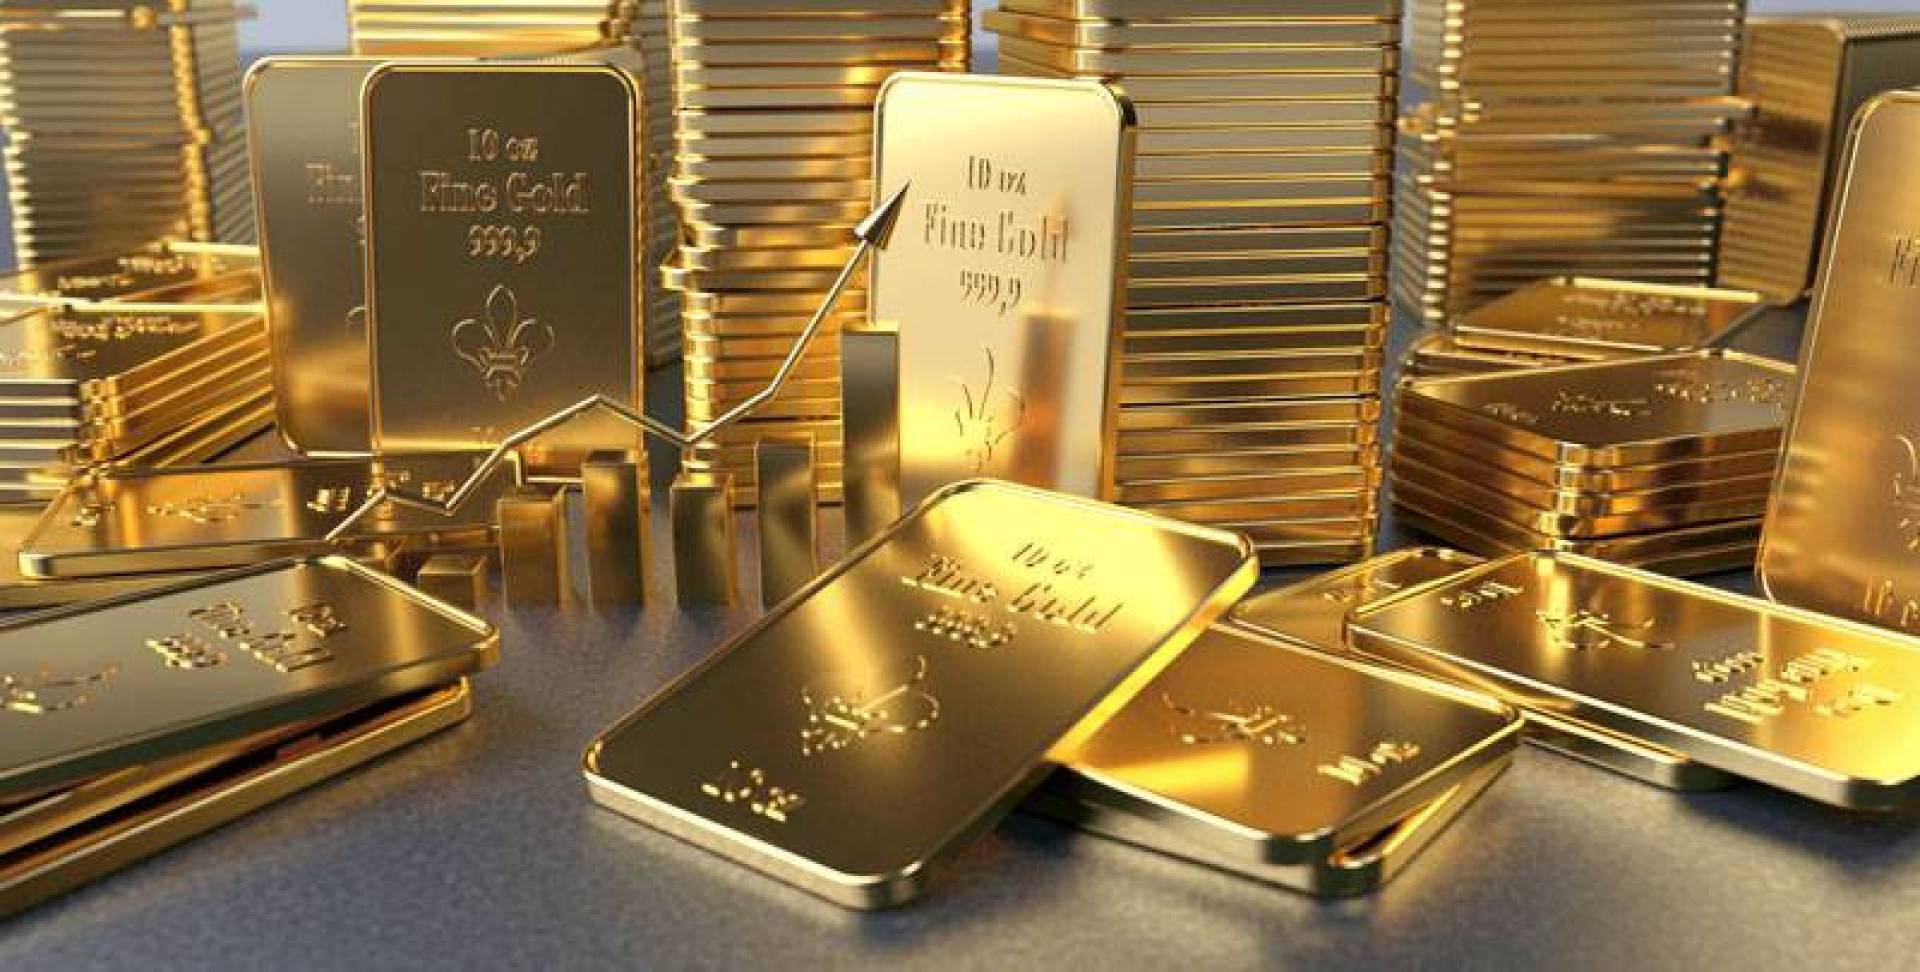 Iraq sold 100 kilograms of gold